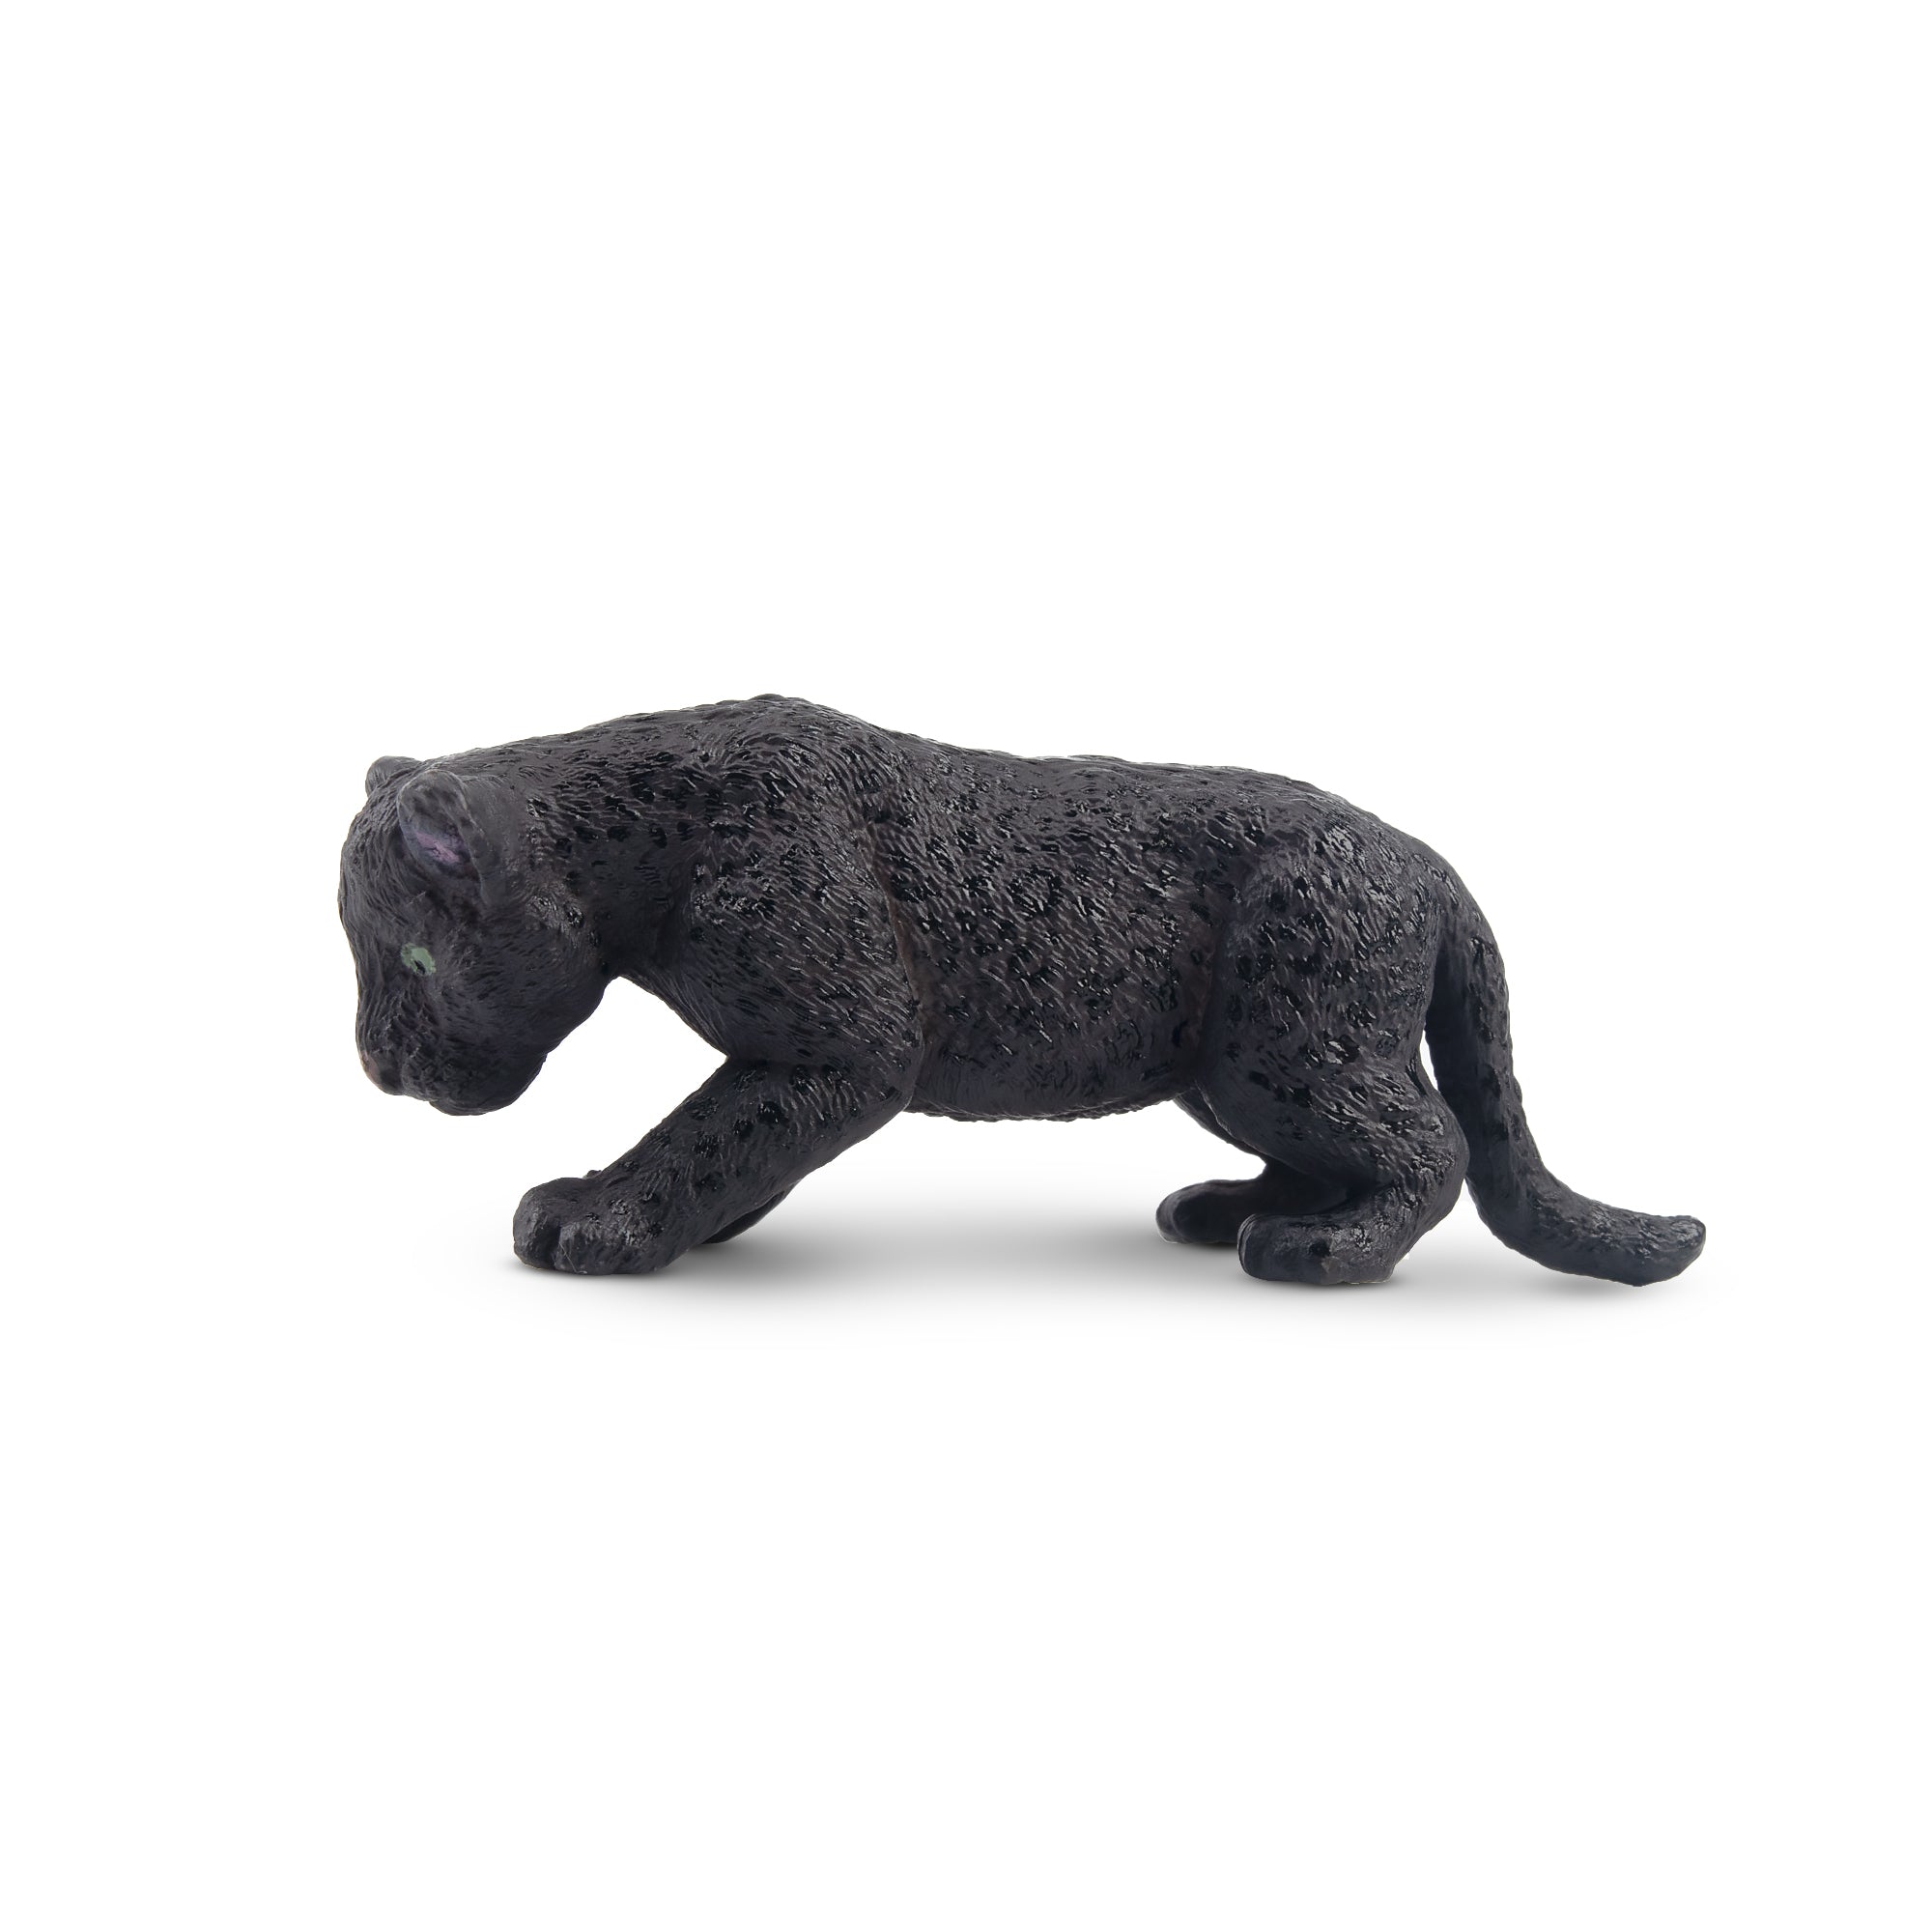 Toymany Black Leopard Cub Figurine Toy